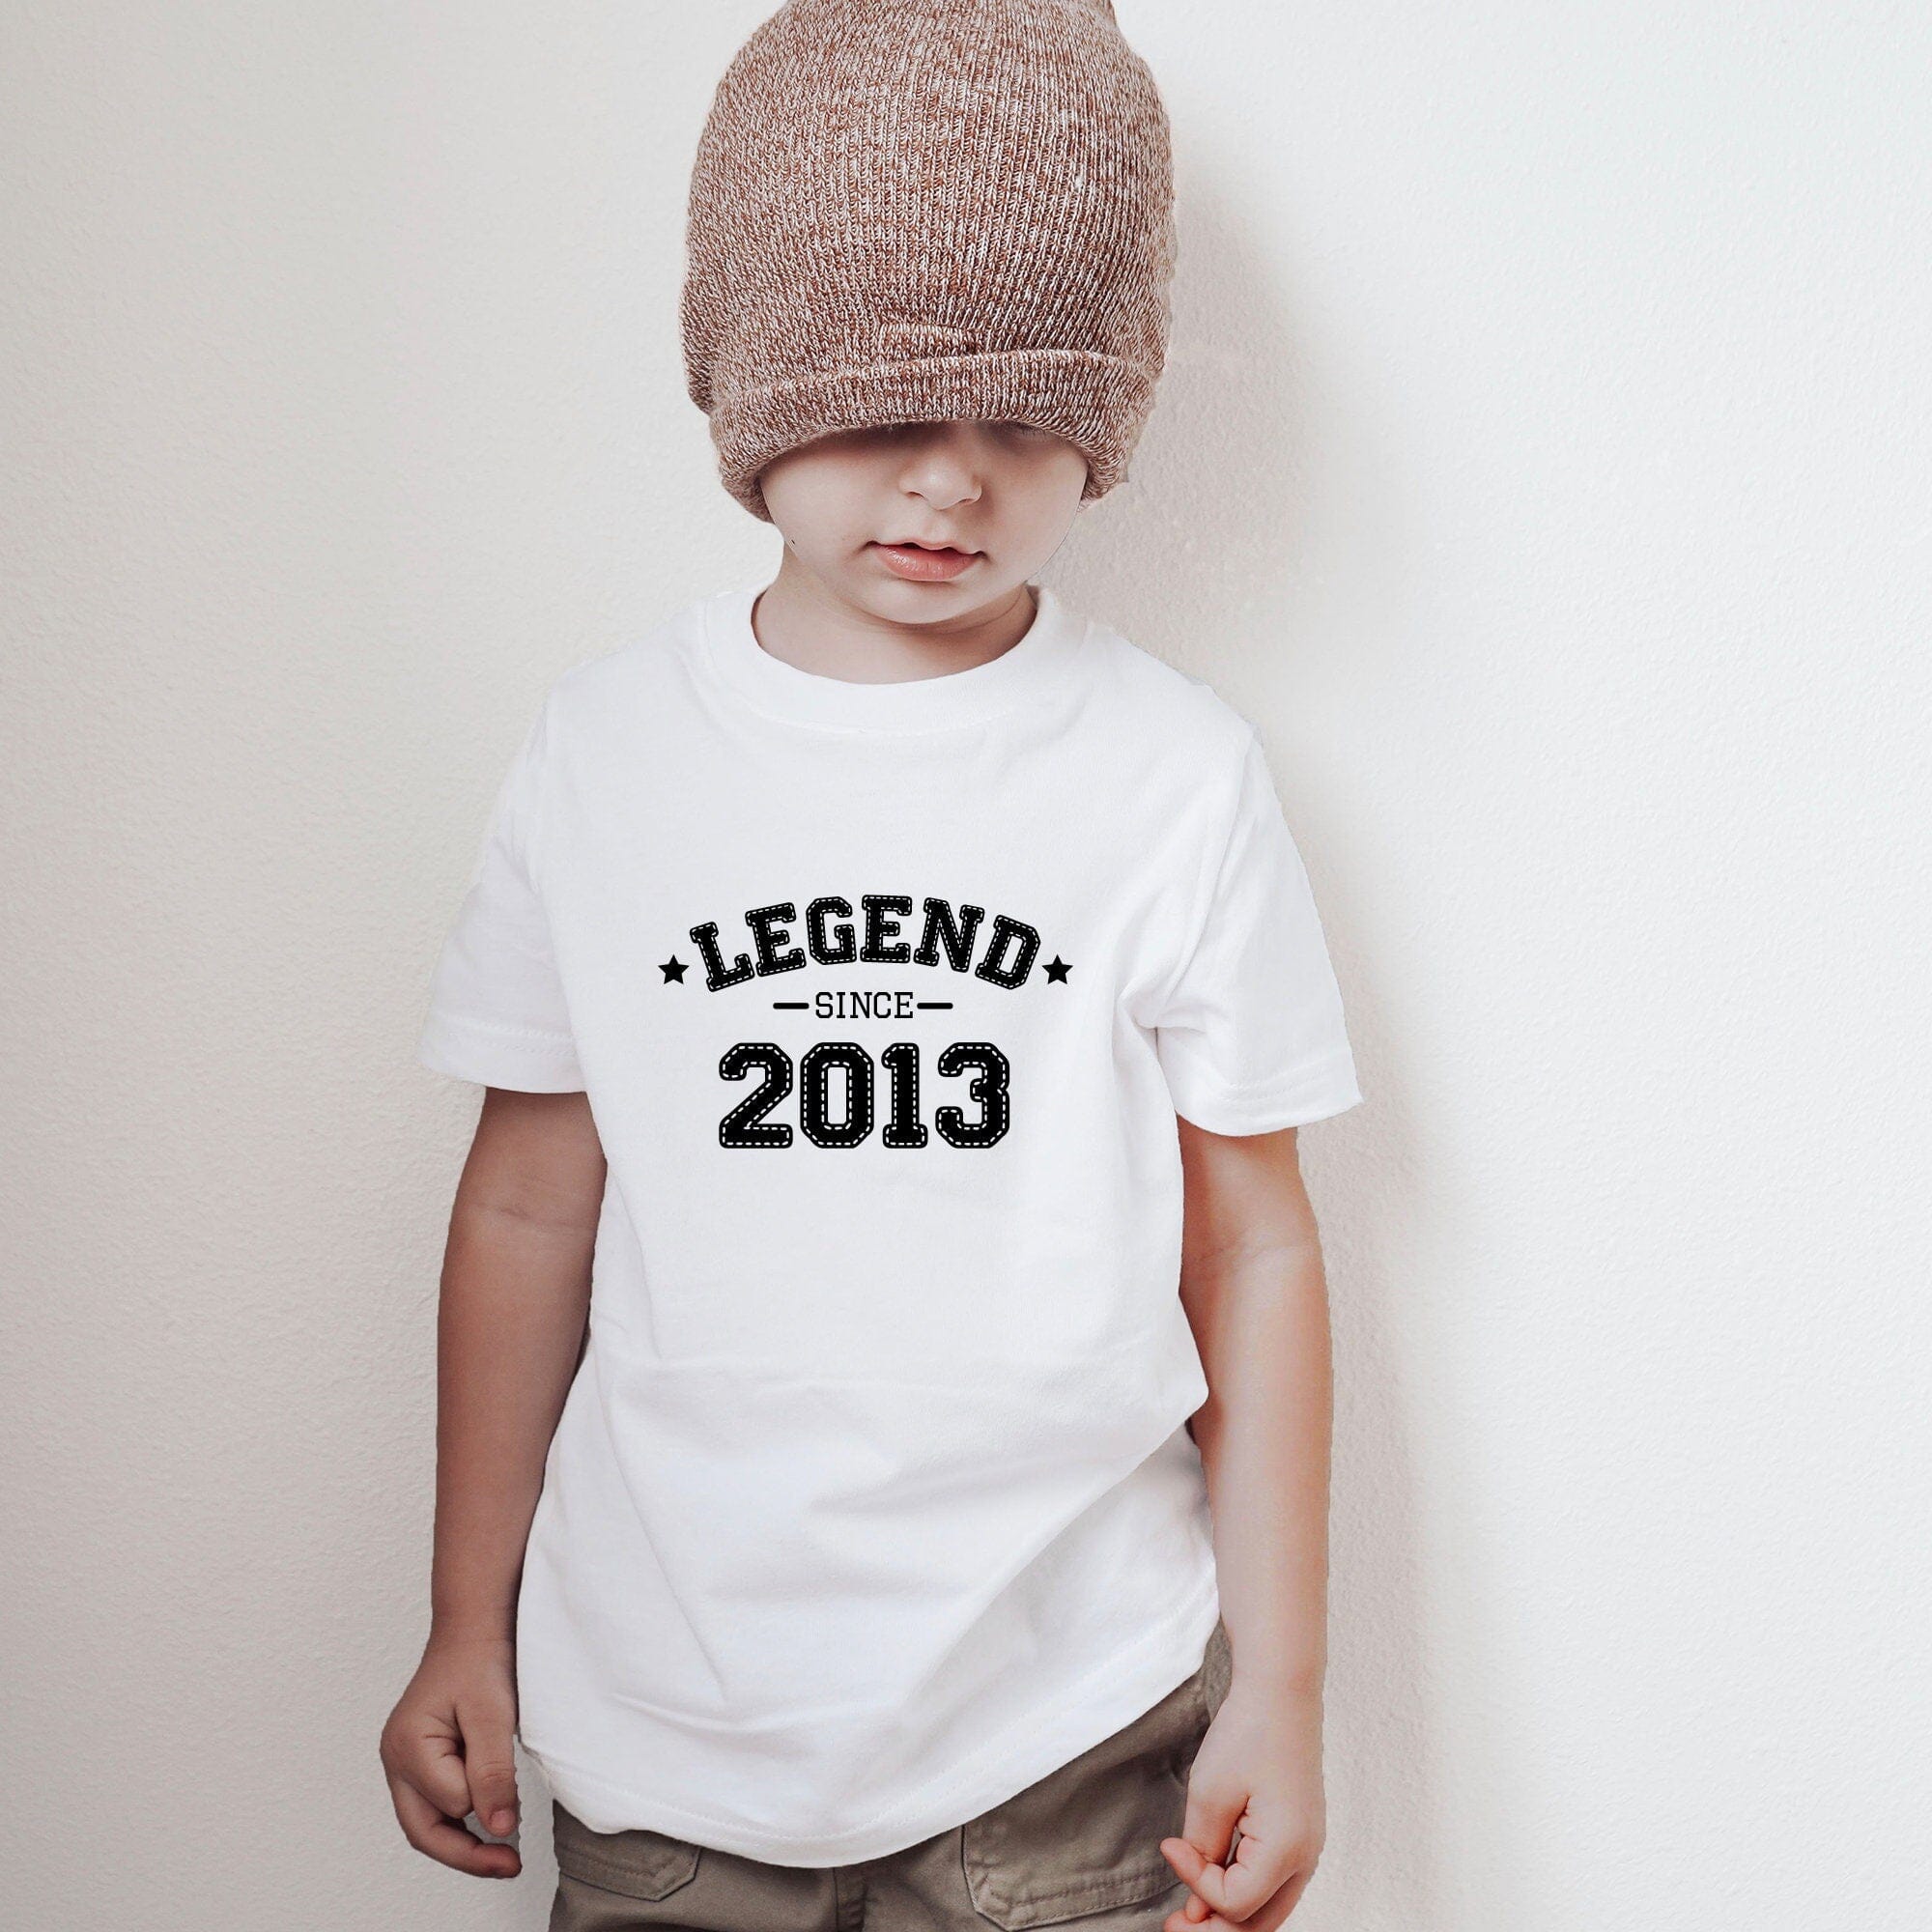 Legend since year kids birthday t-shirt, Toddler Youth kids outfit, Boys girls children swear